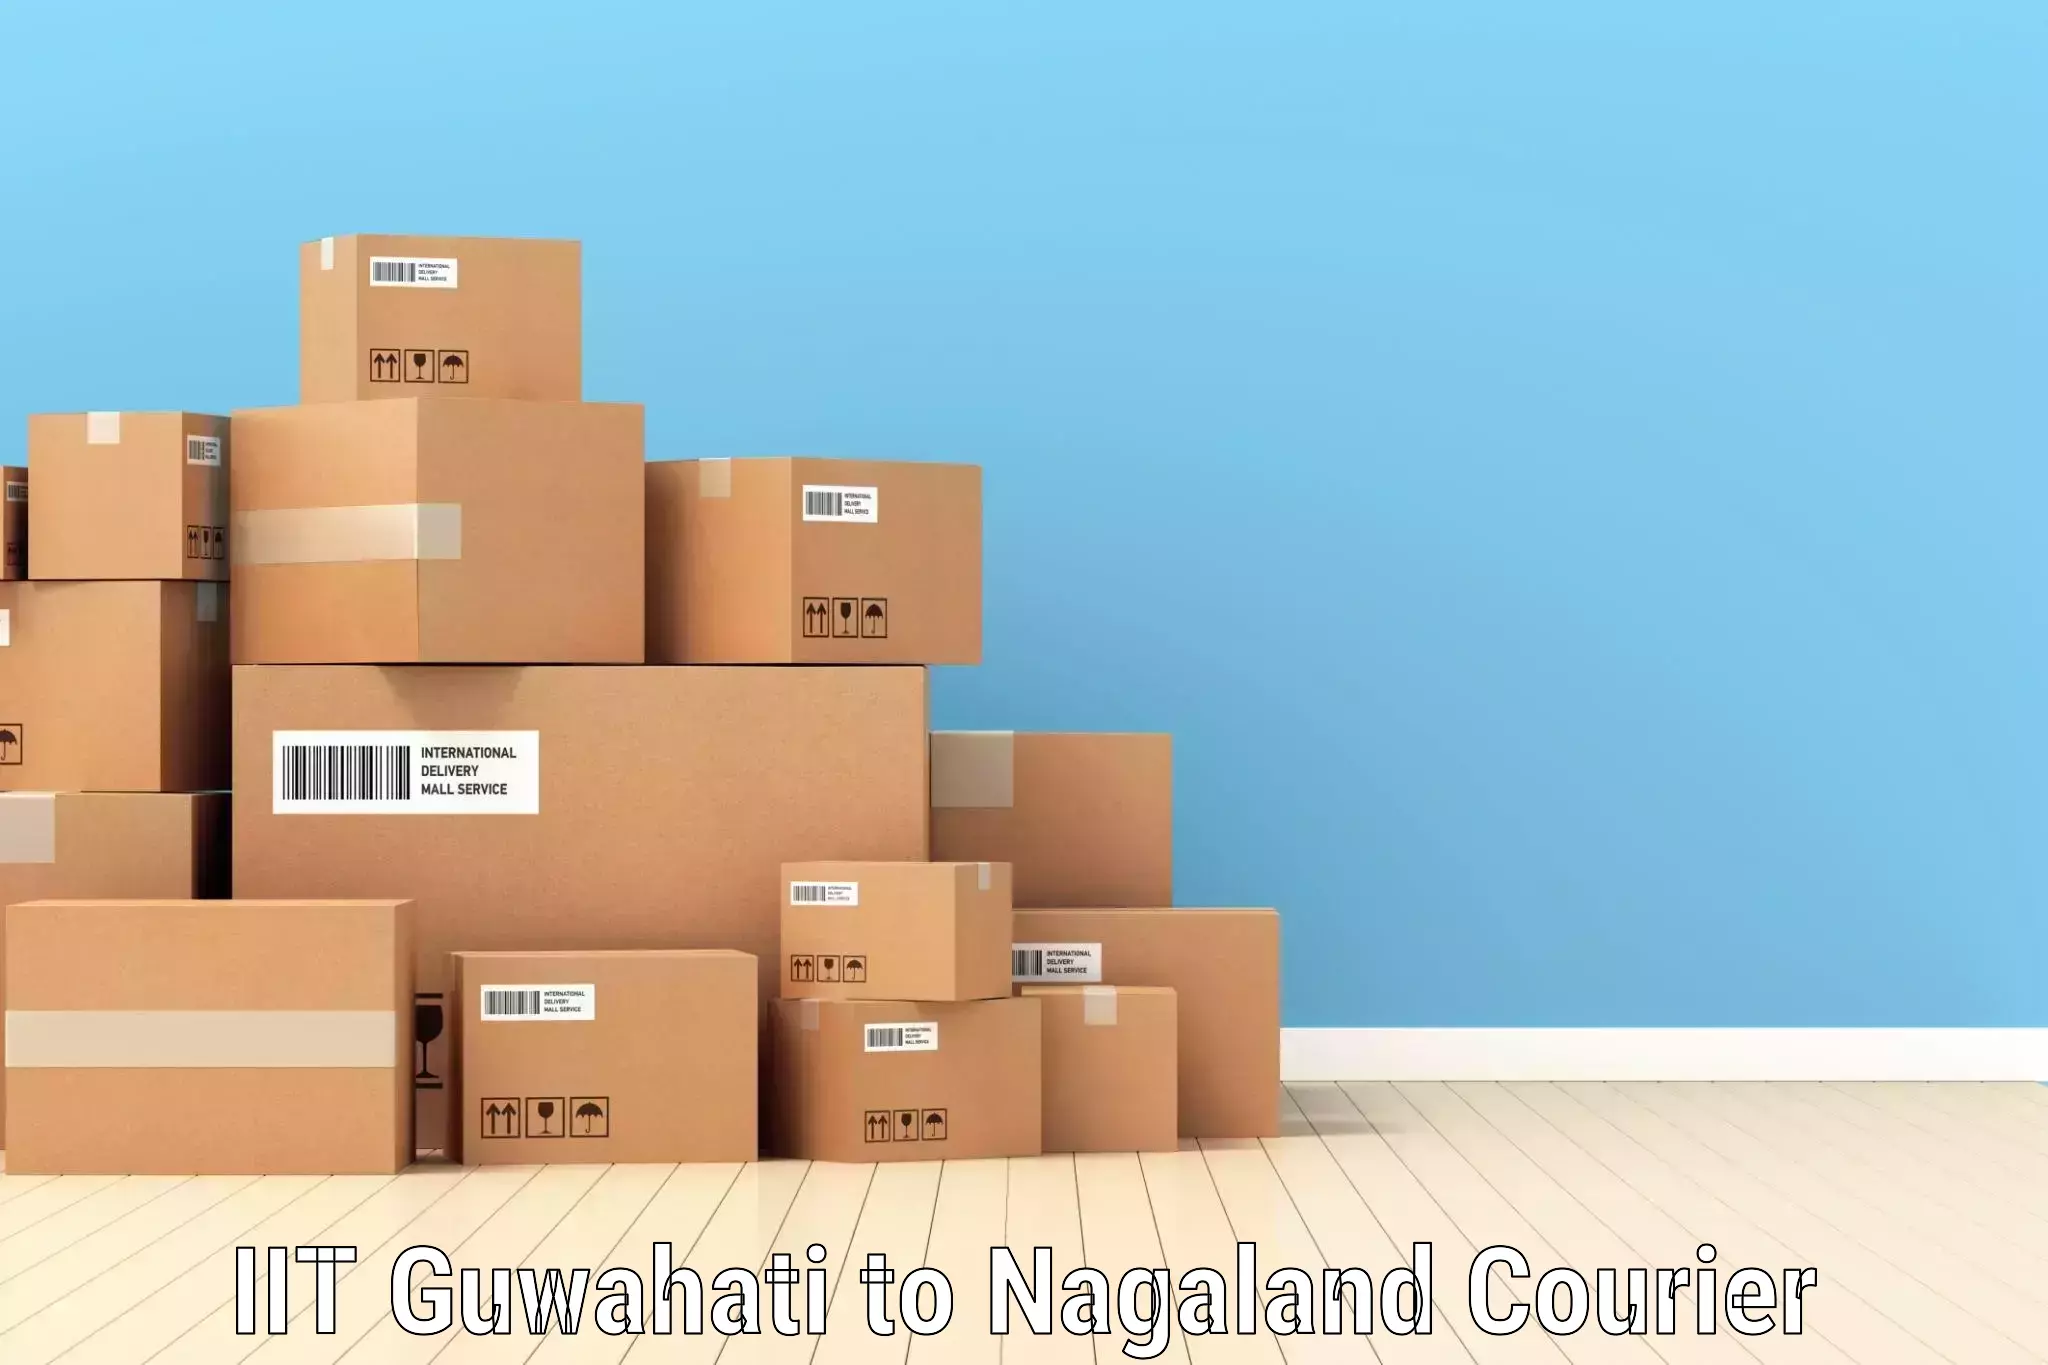 24/7 courier service IIT Guwahati to Nagaland